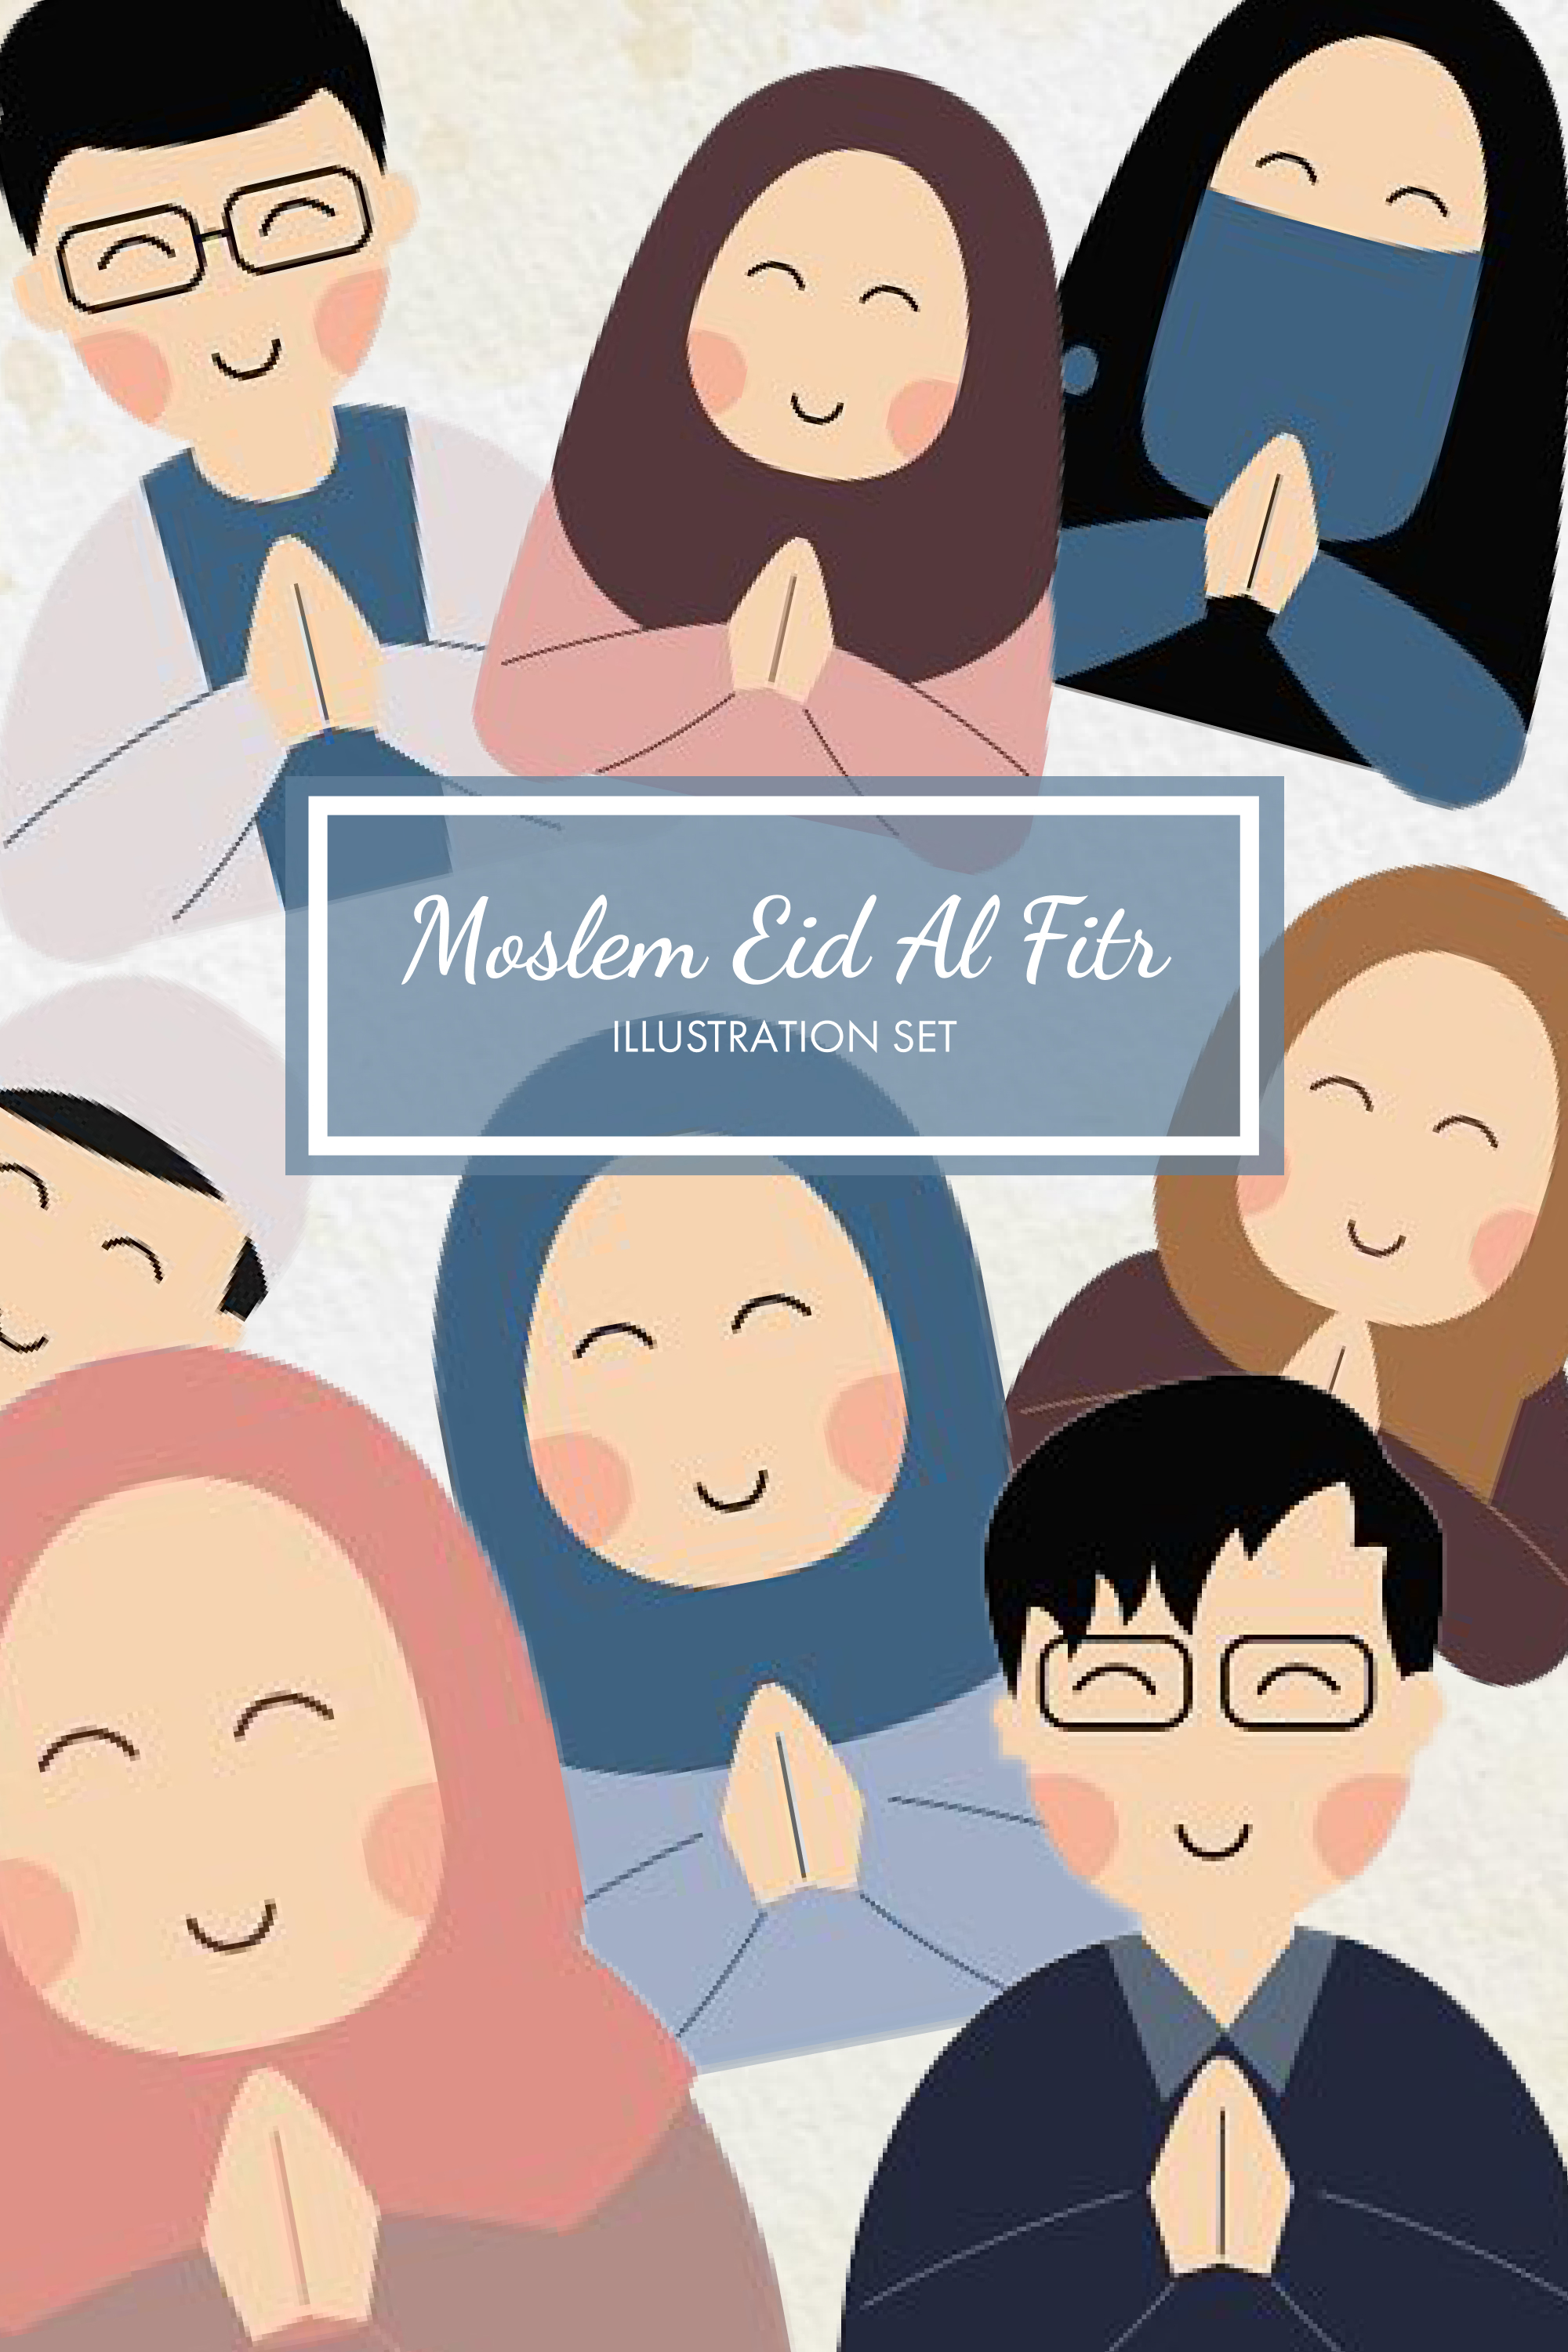 Moslem eid al fitr illustration set of pinterest.